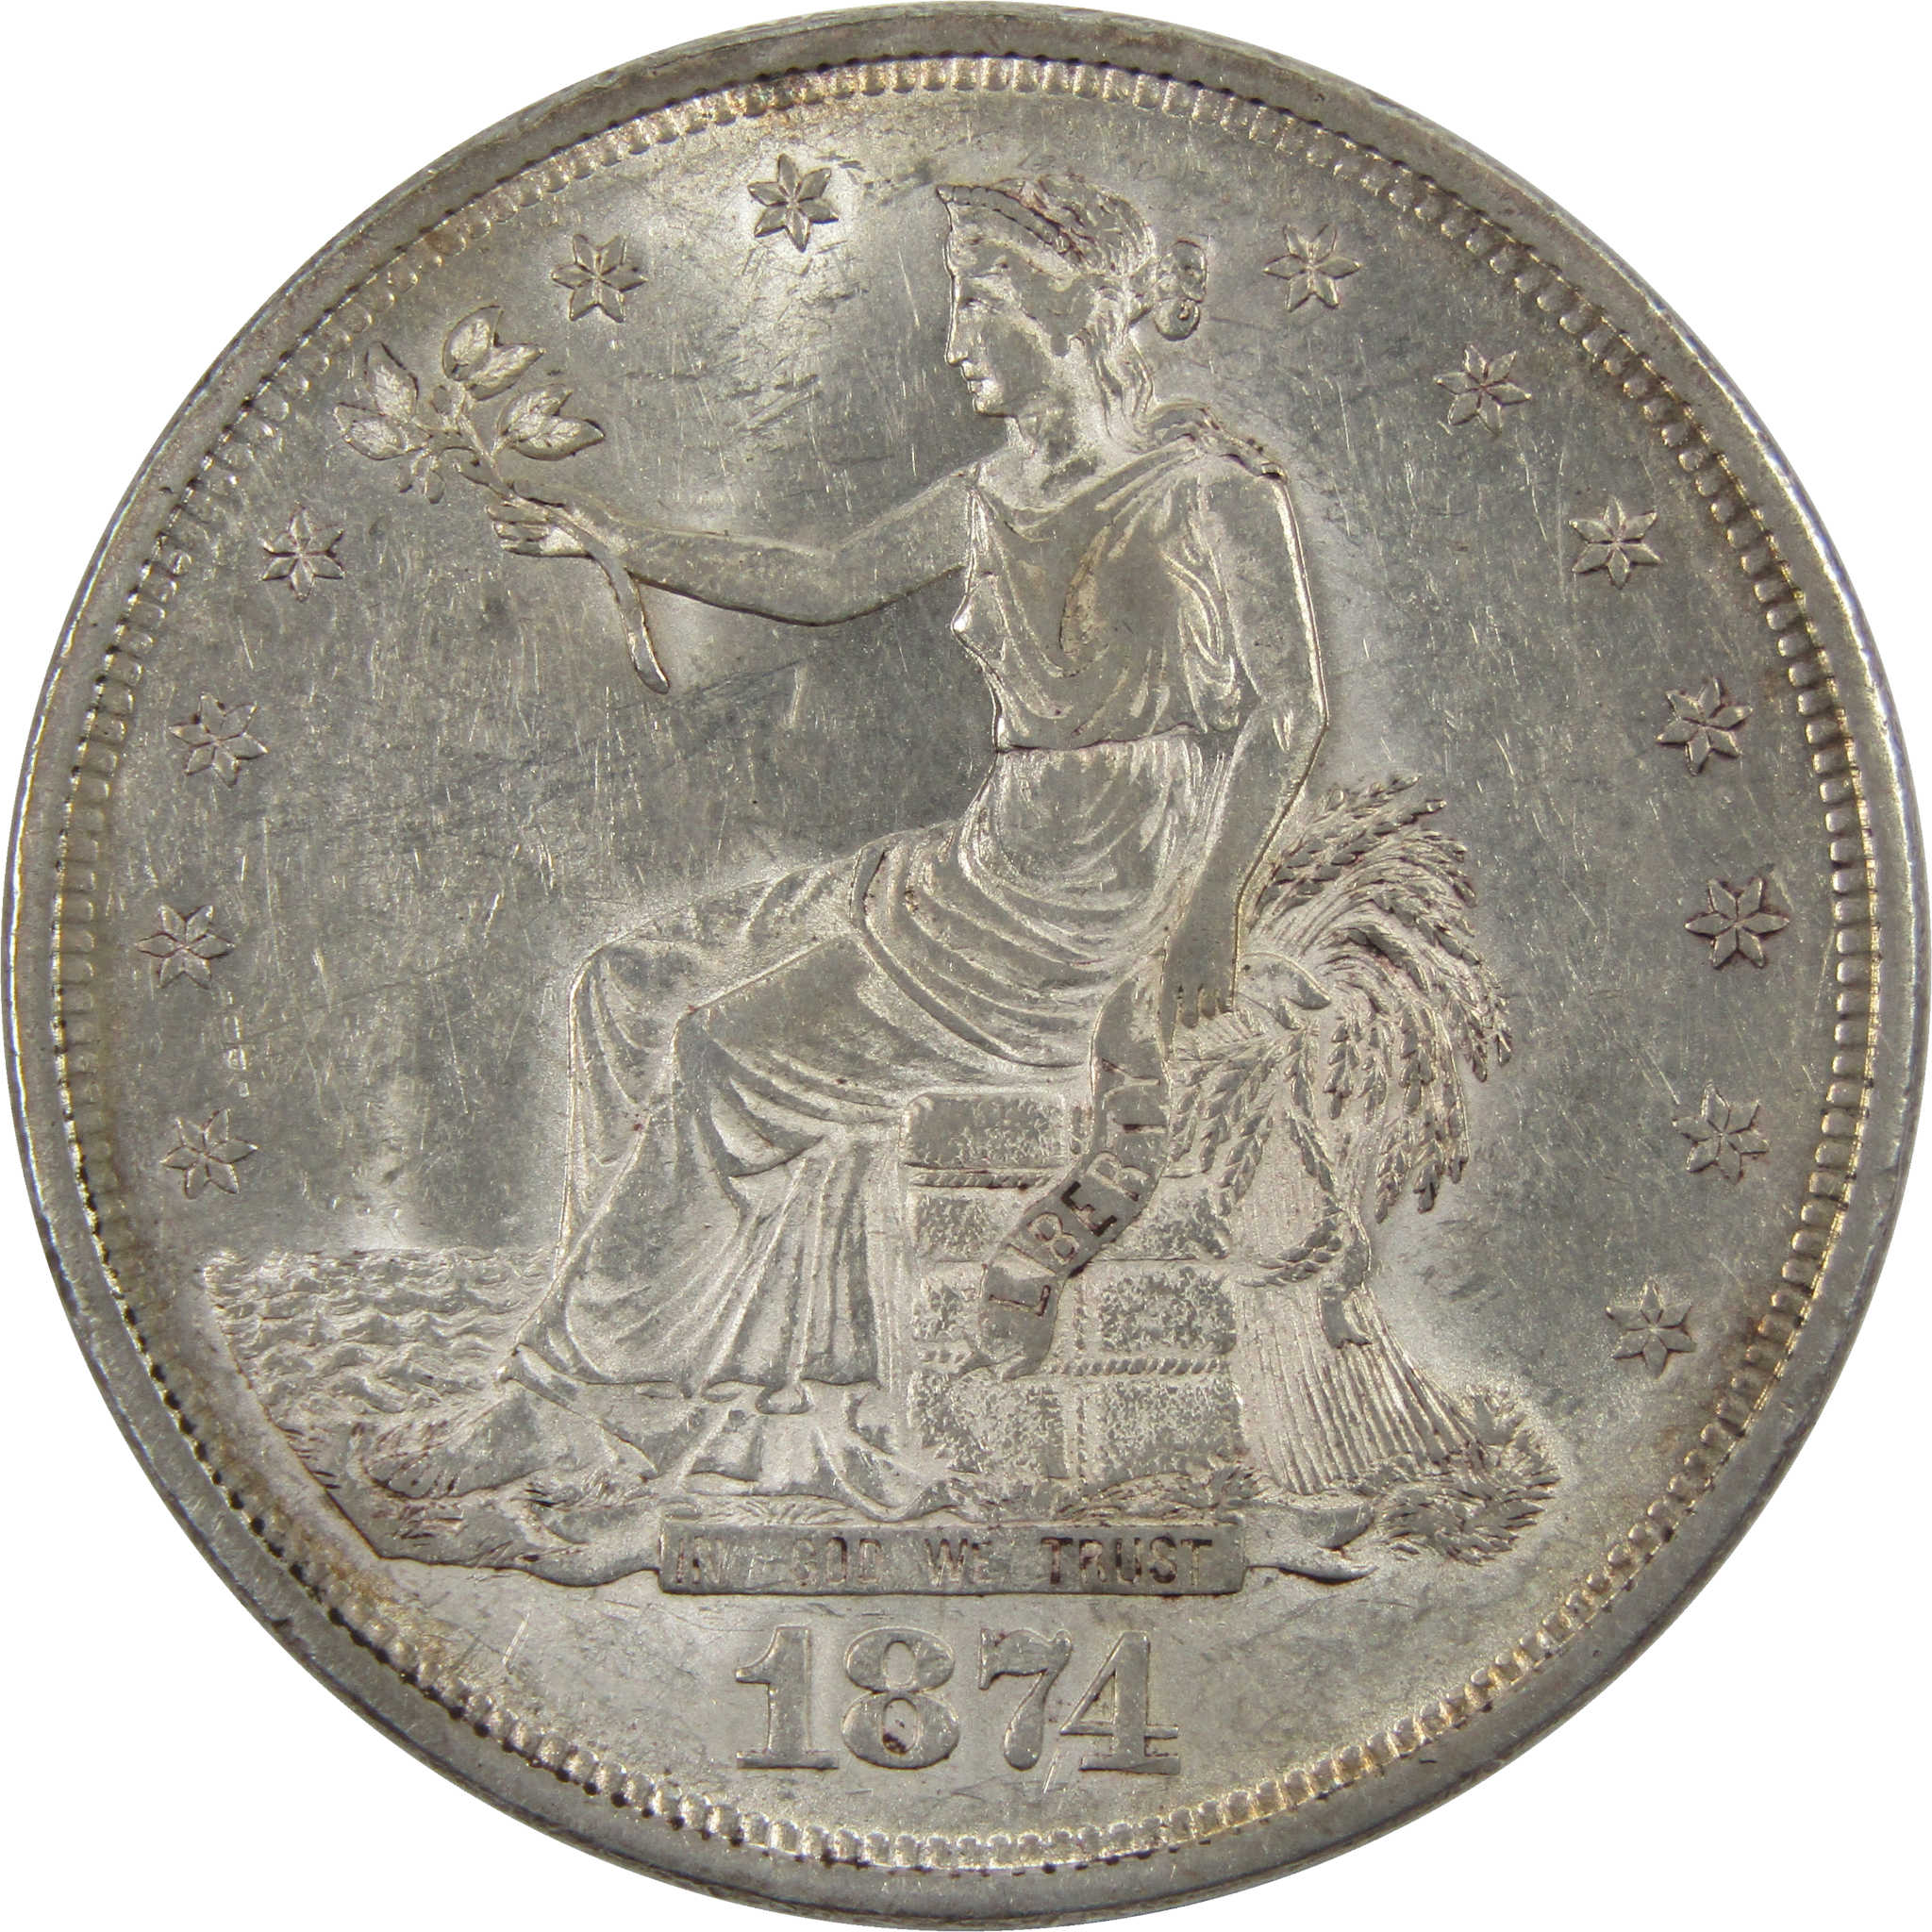 1874 Trade Dollar Borderline Uncirculated 90% Silver $1 Coin SKU:I5991